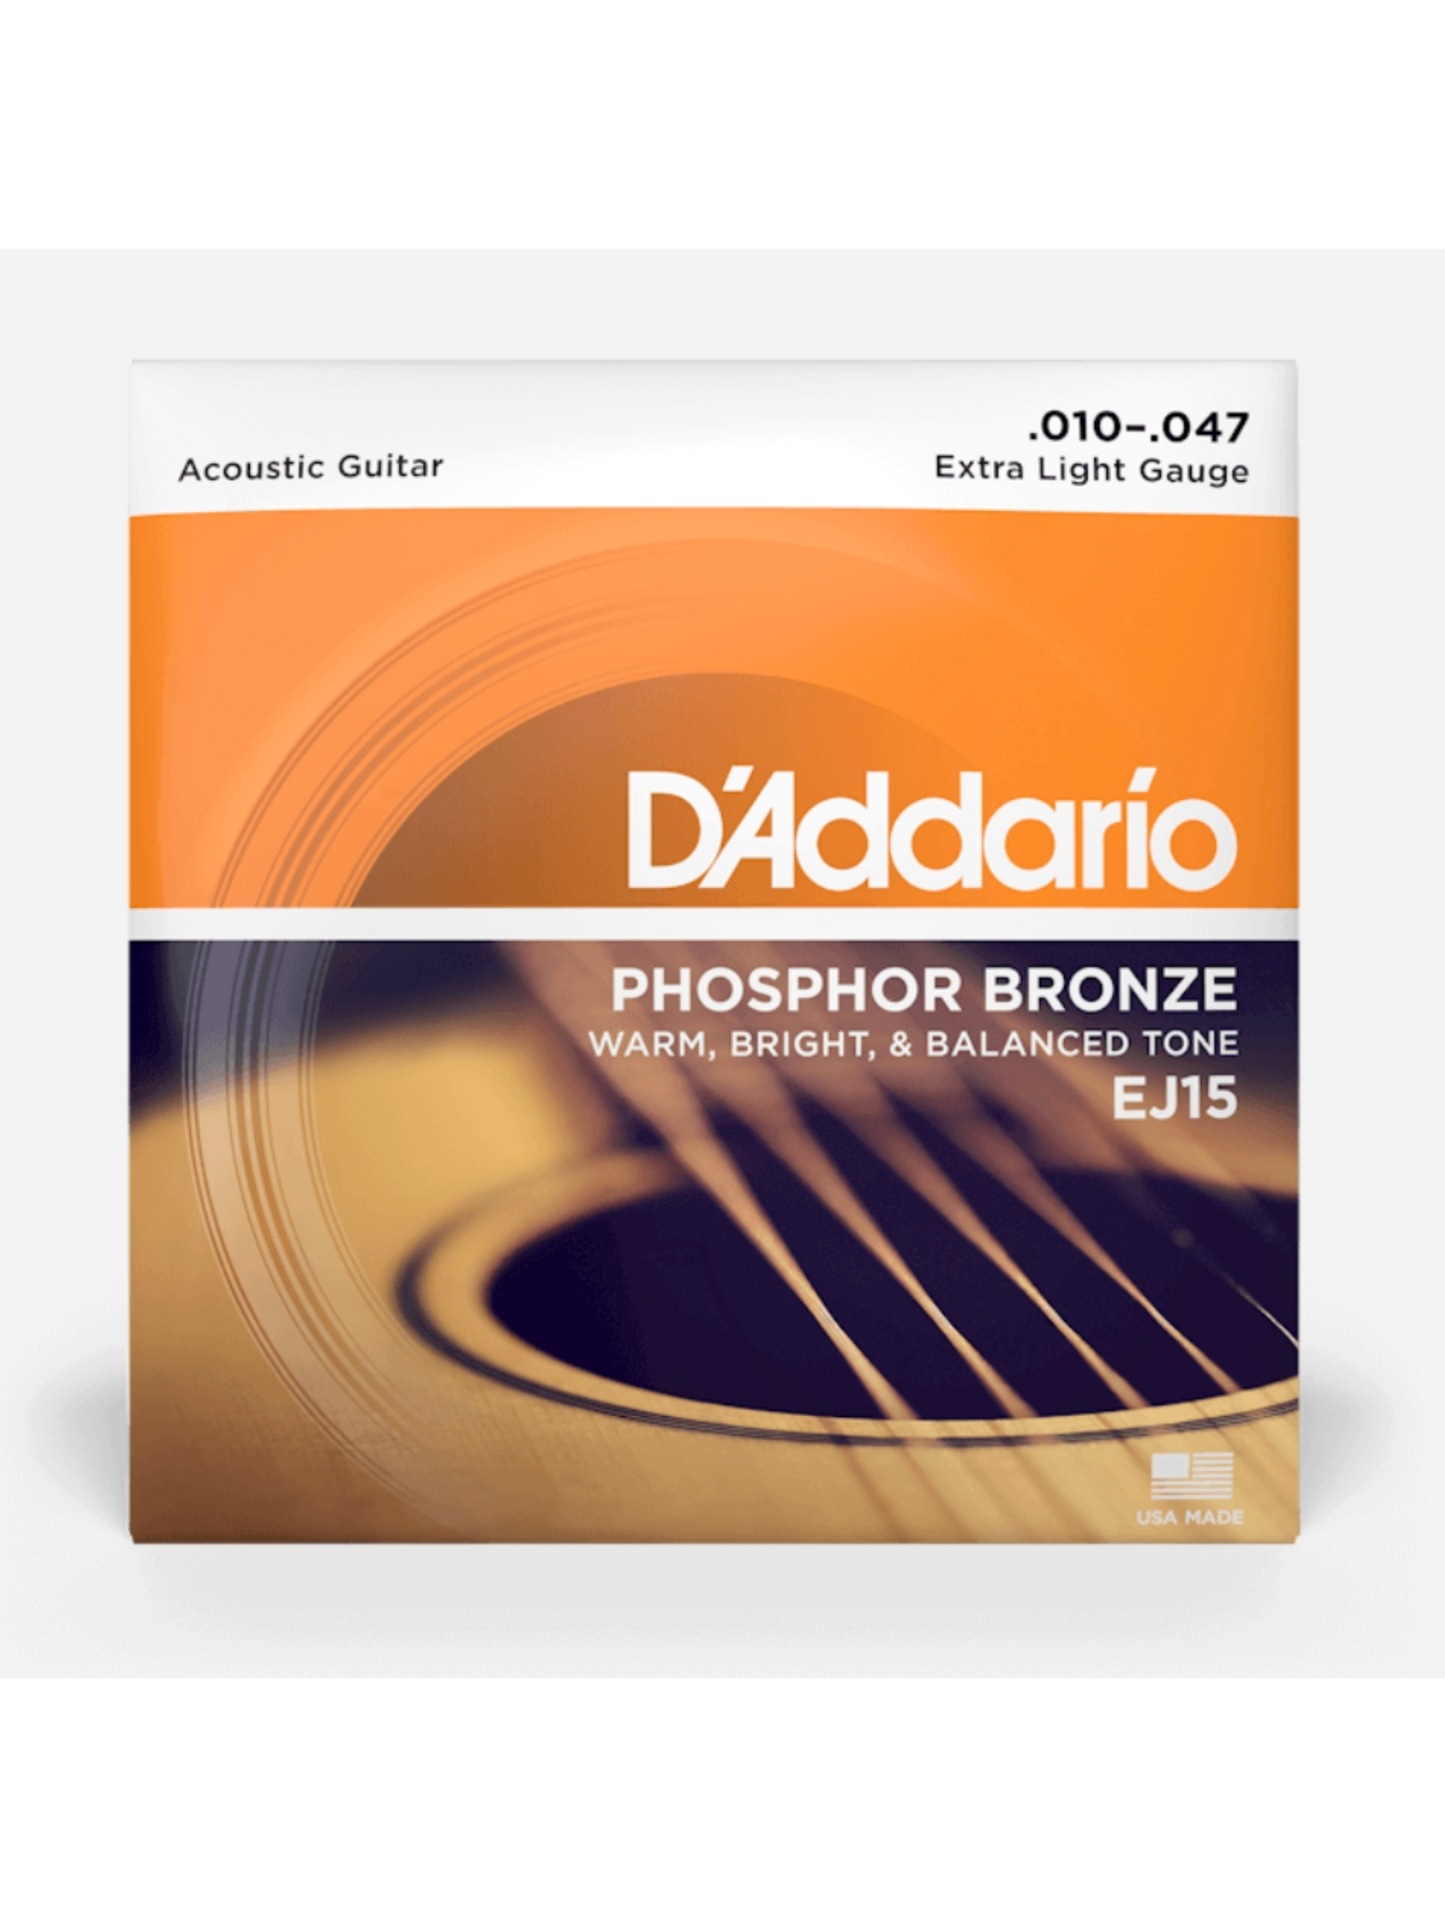 D'Addario Phosphor Bronze Acoustic Guitar Strings